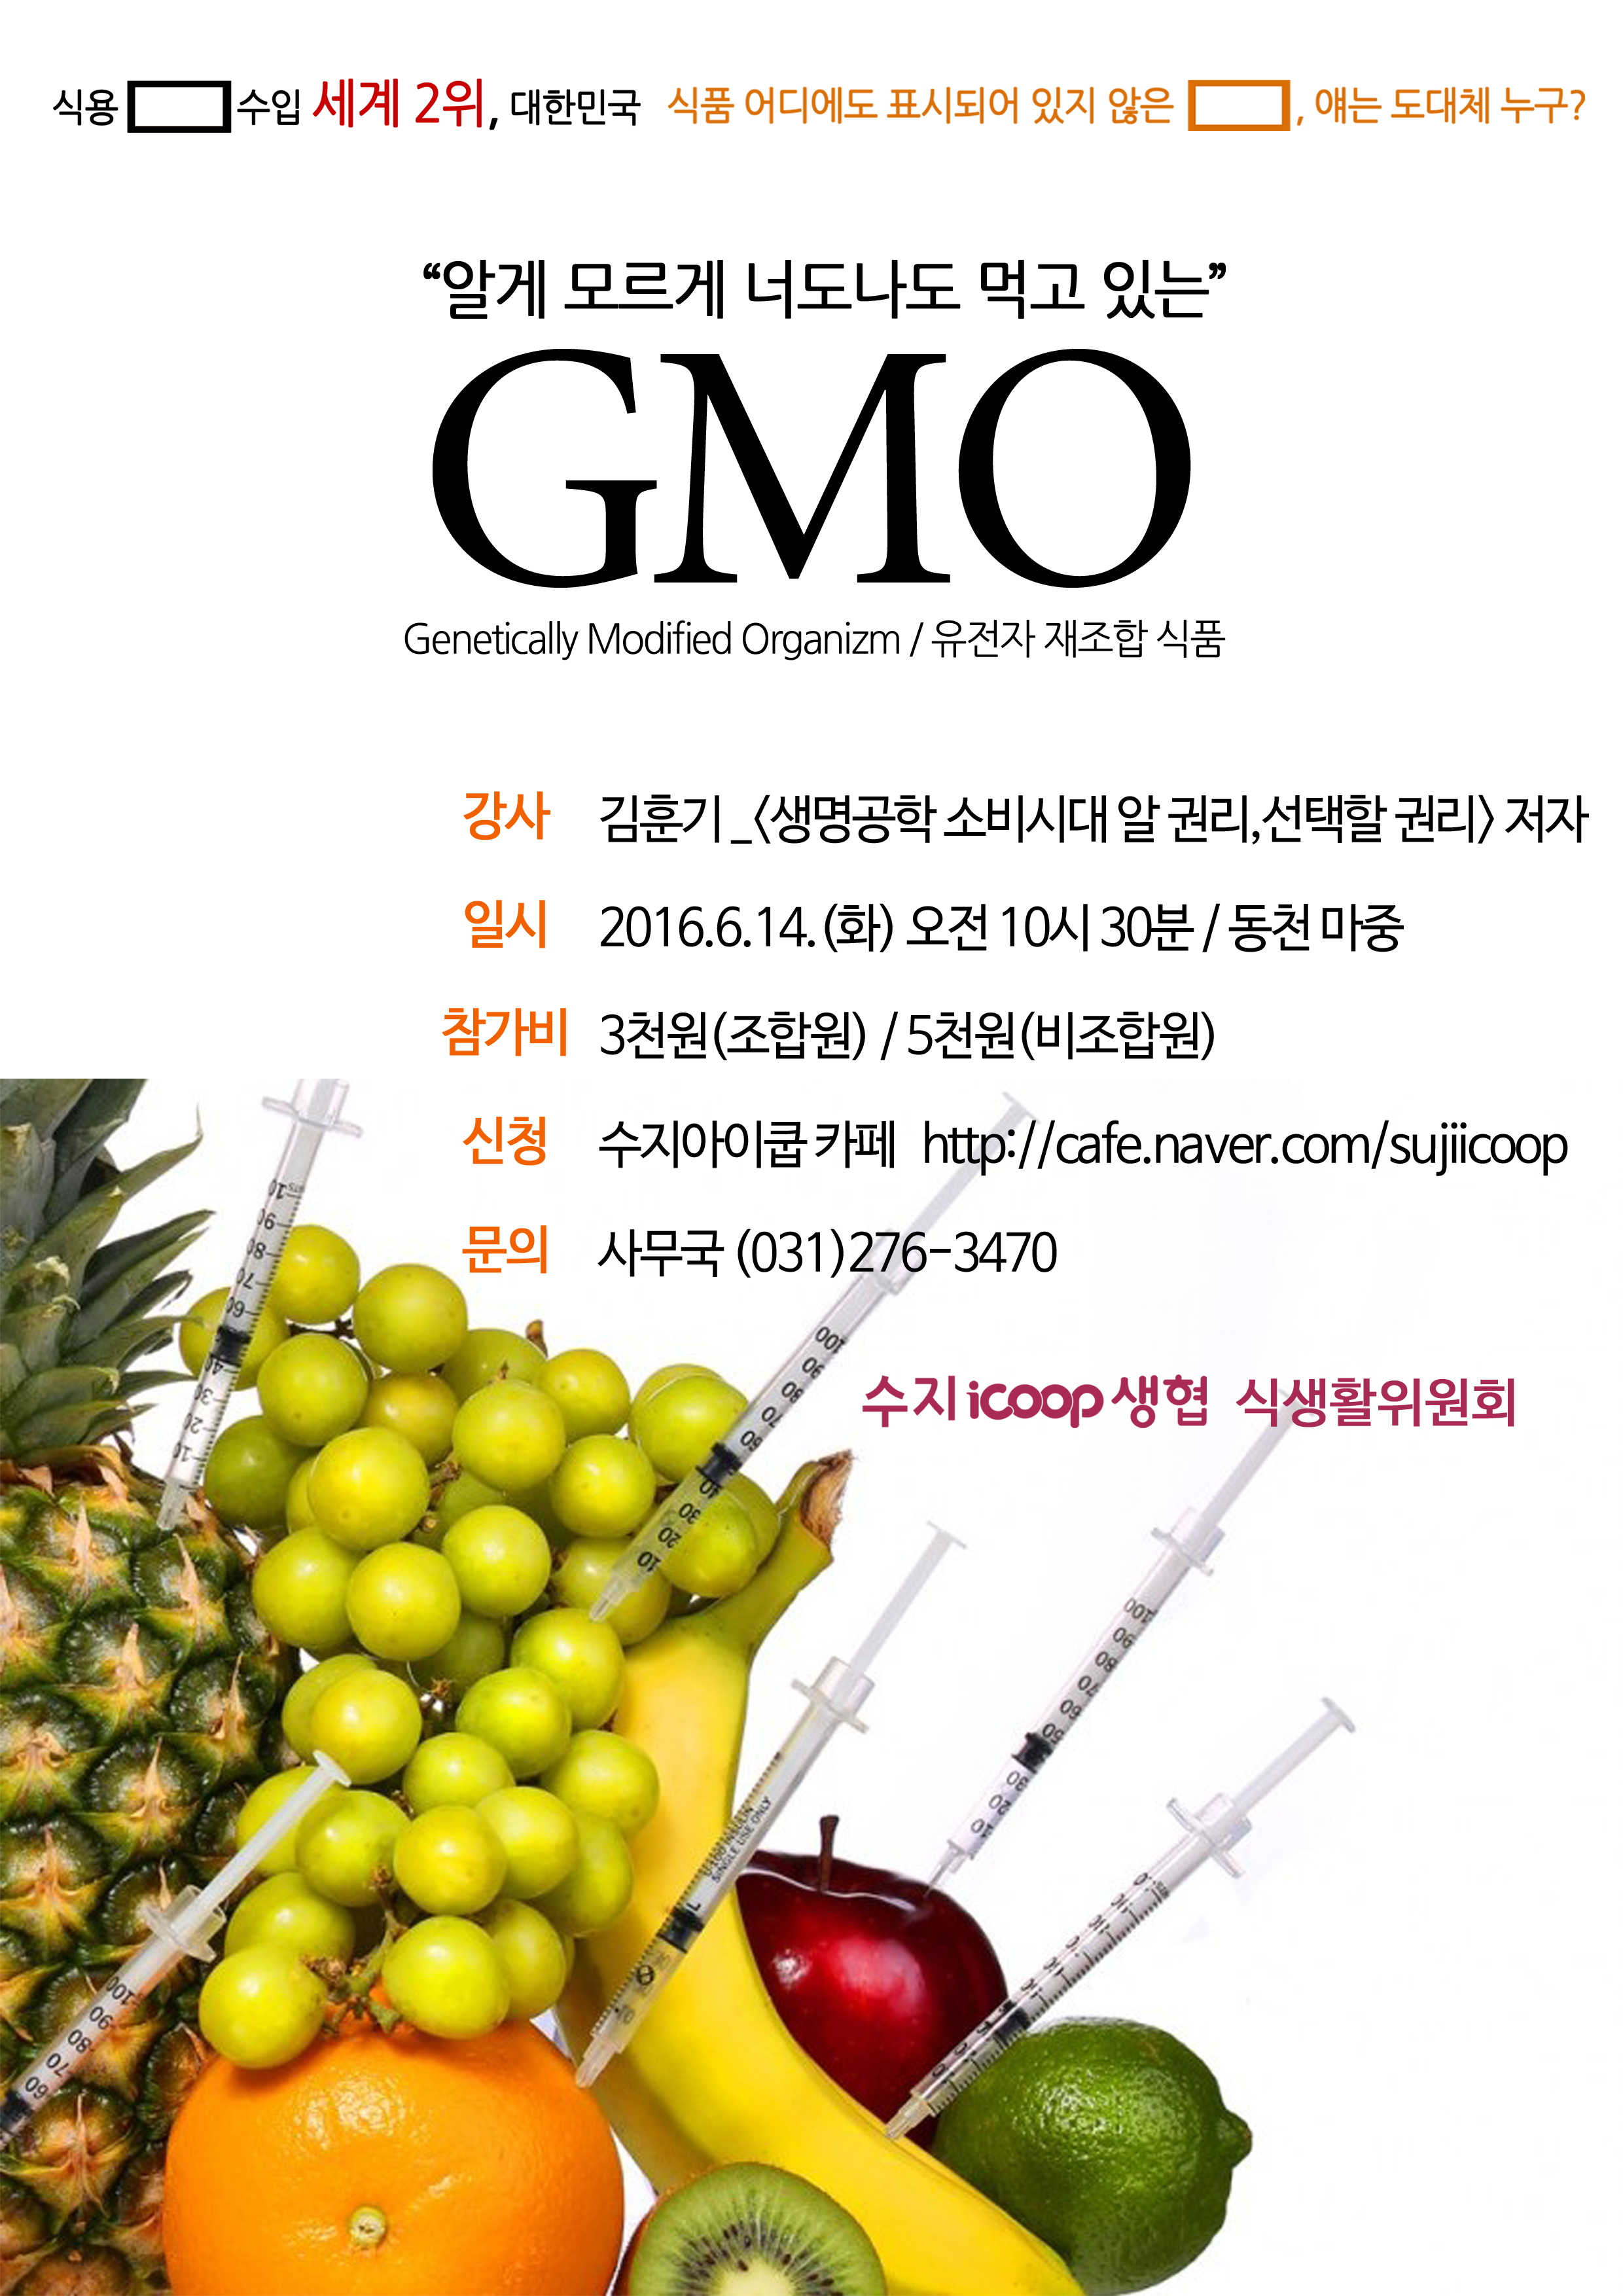 GMO대중강좌(4)_가로 복사.jpg